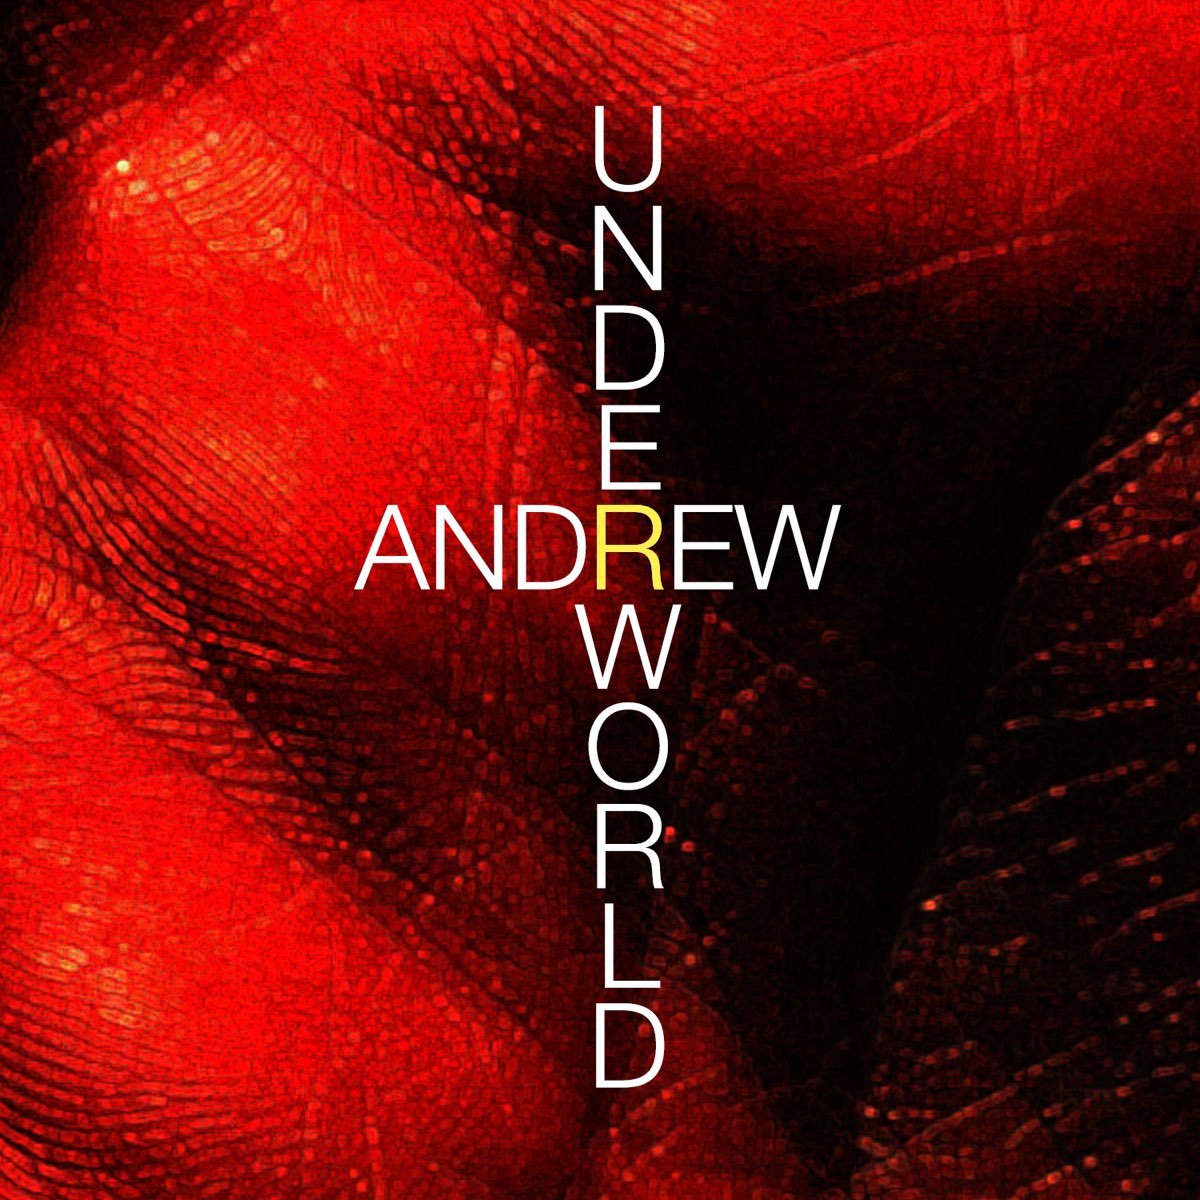 Музыка эндрю. Underworld альбомы. Underworld Jumbo. Обложка альбомов Andrew gg. Underworld песня.